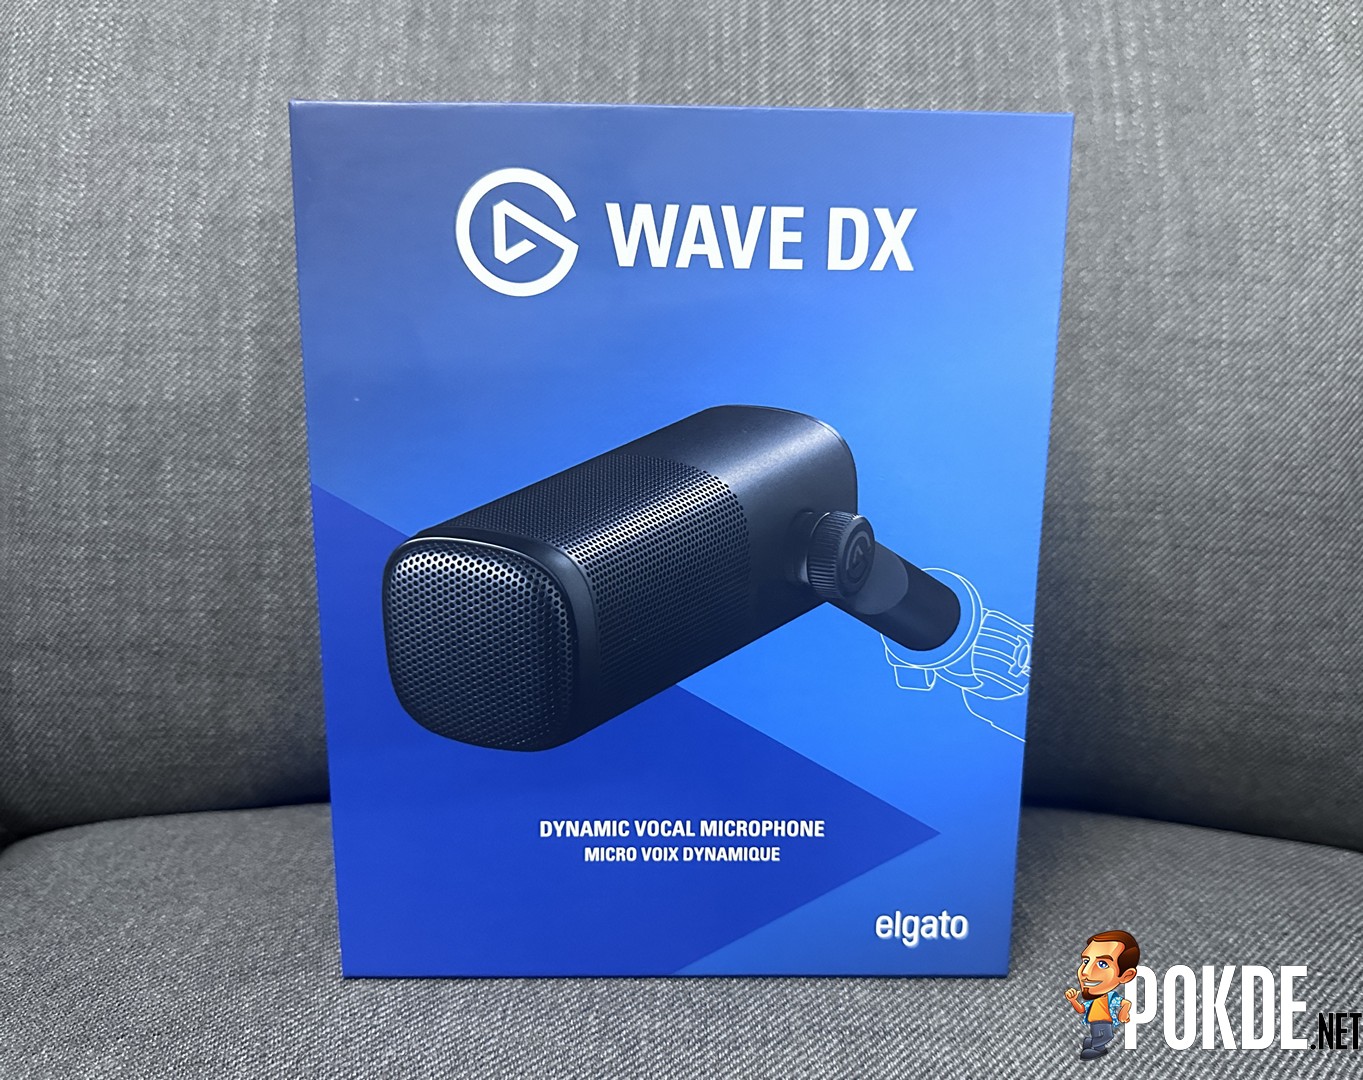 Elgato Wave DX Review - Page 2 - eTeknix